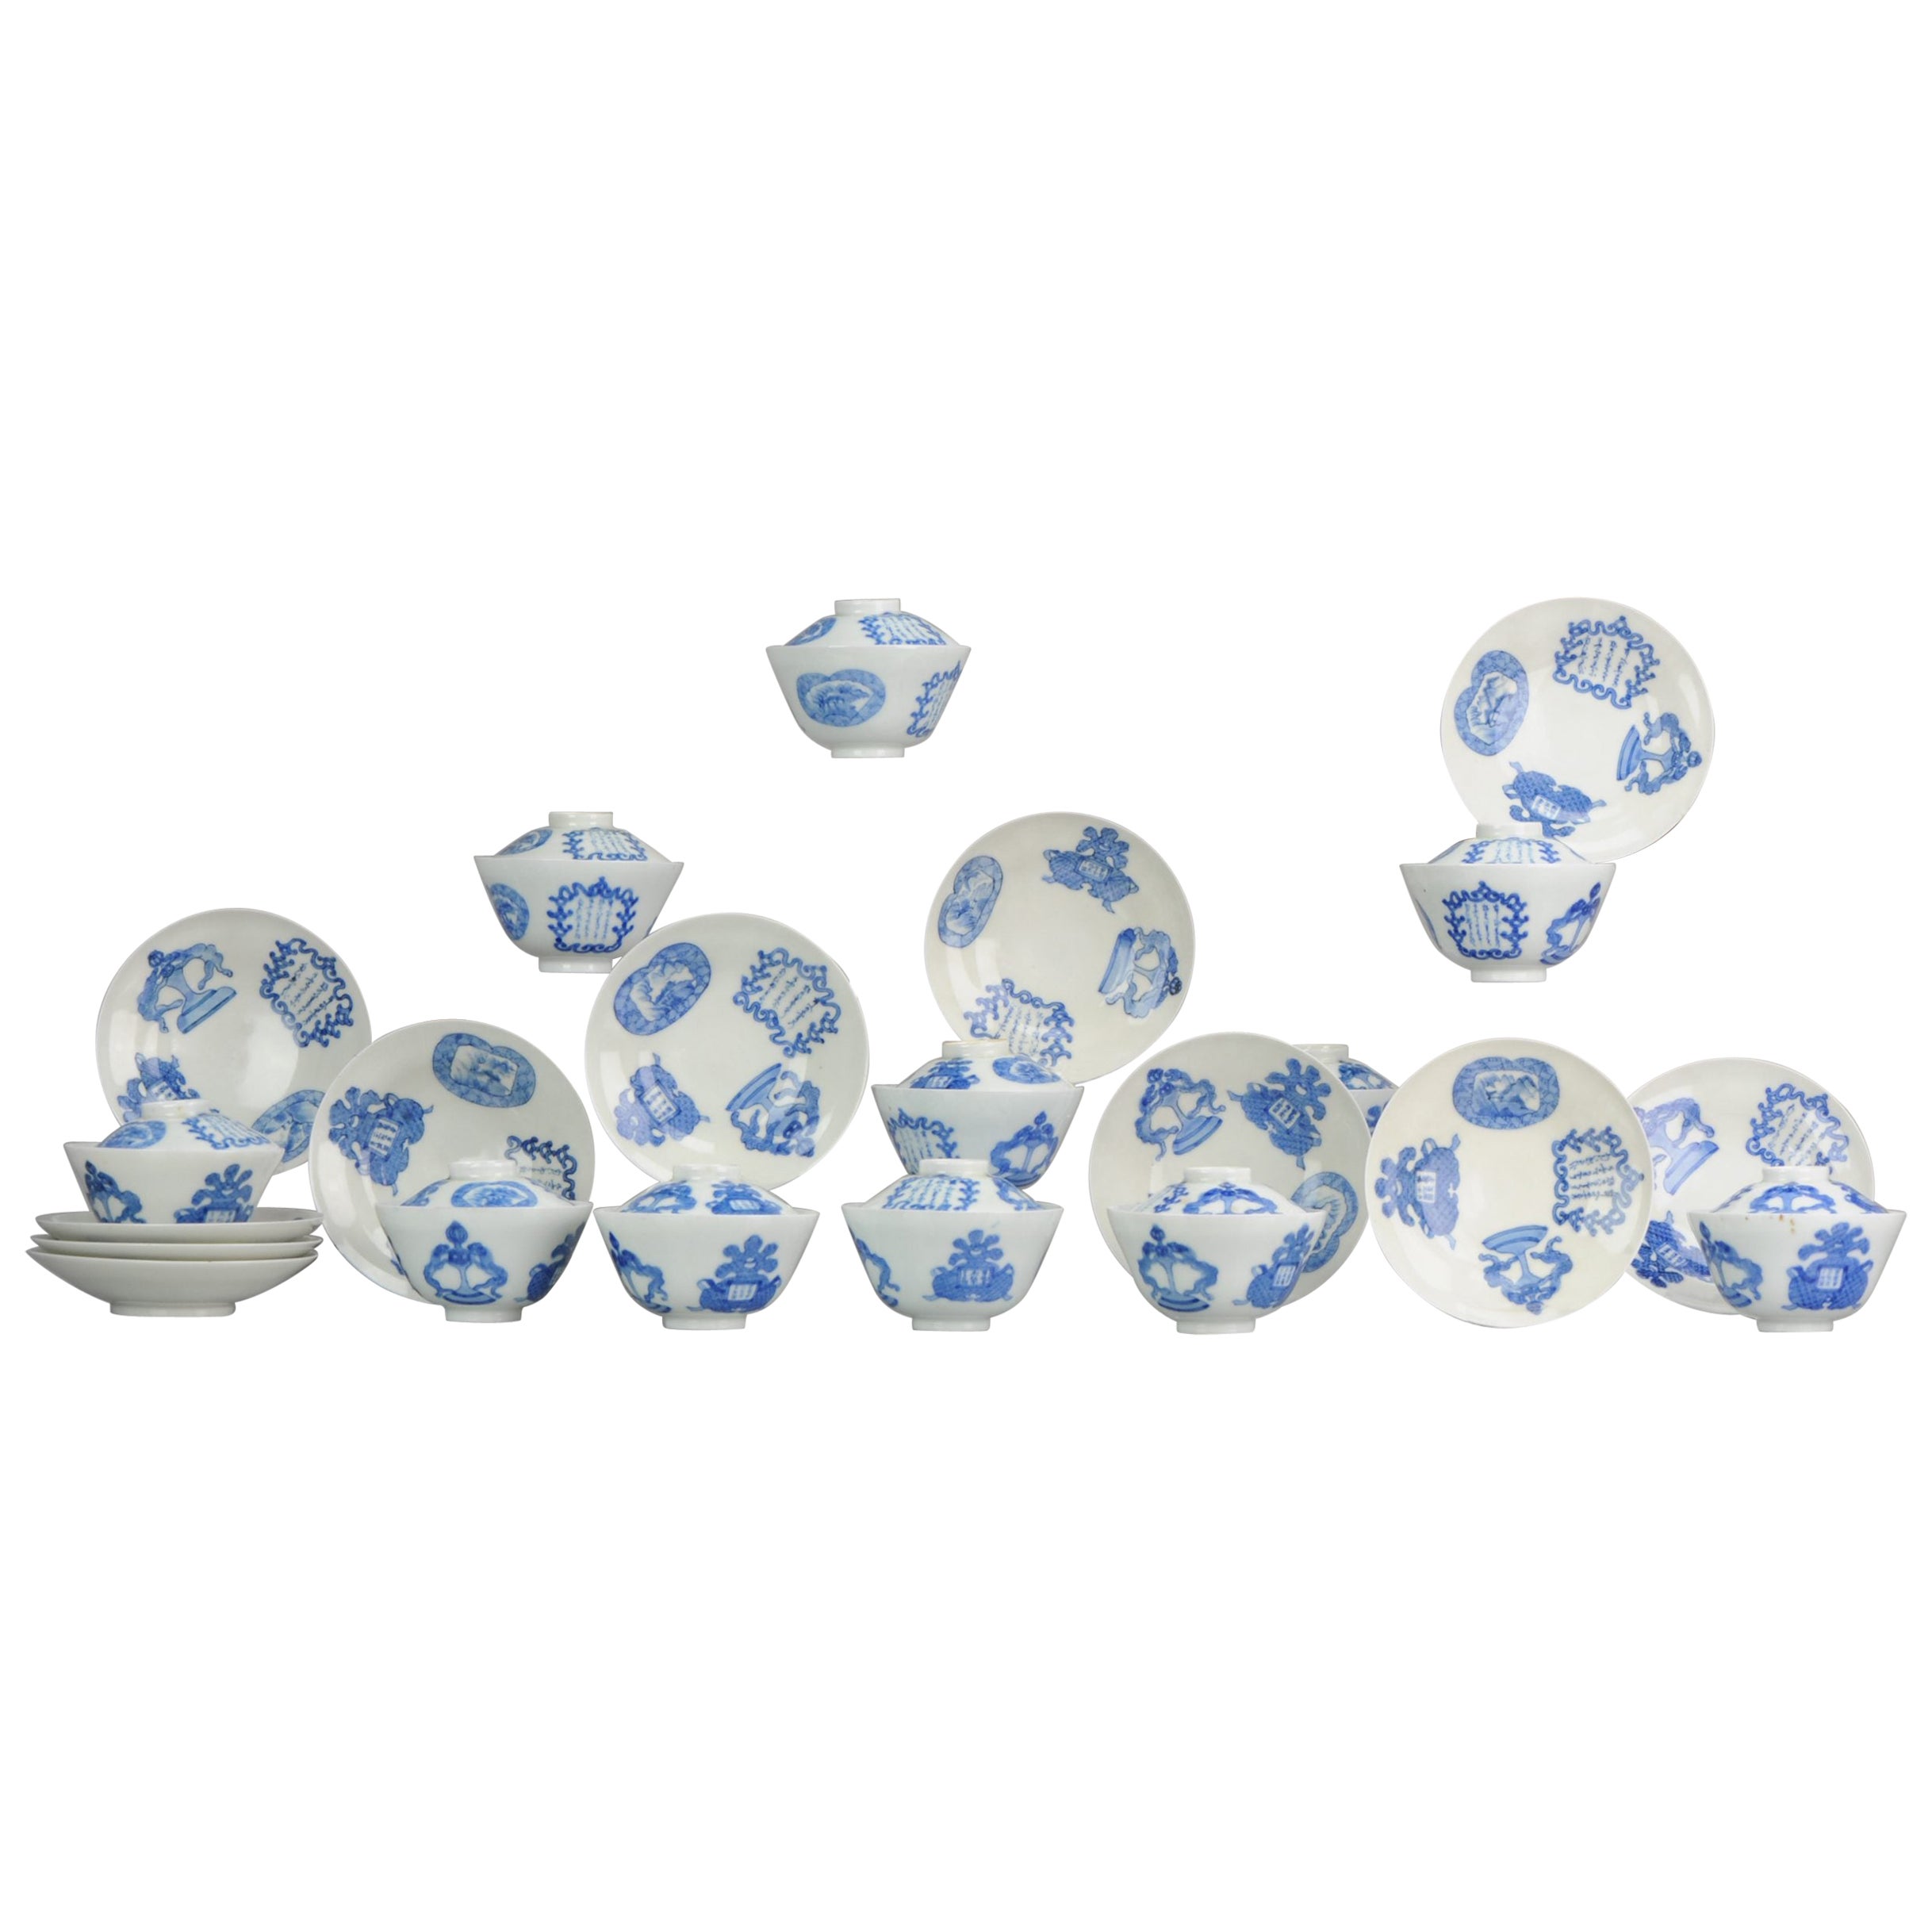 Set of 11 Antique Japanese Meiji Period Chawan Tea Bowls Porcelain Eggshell